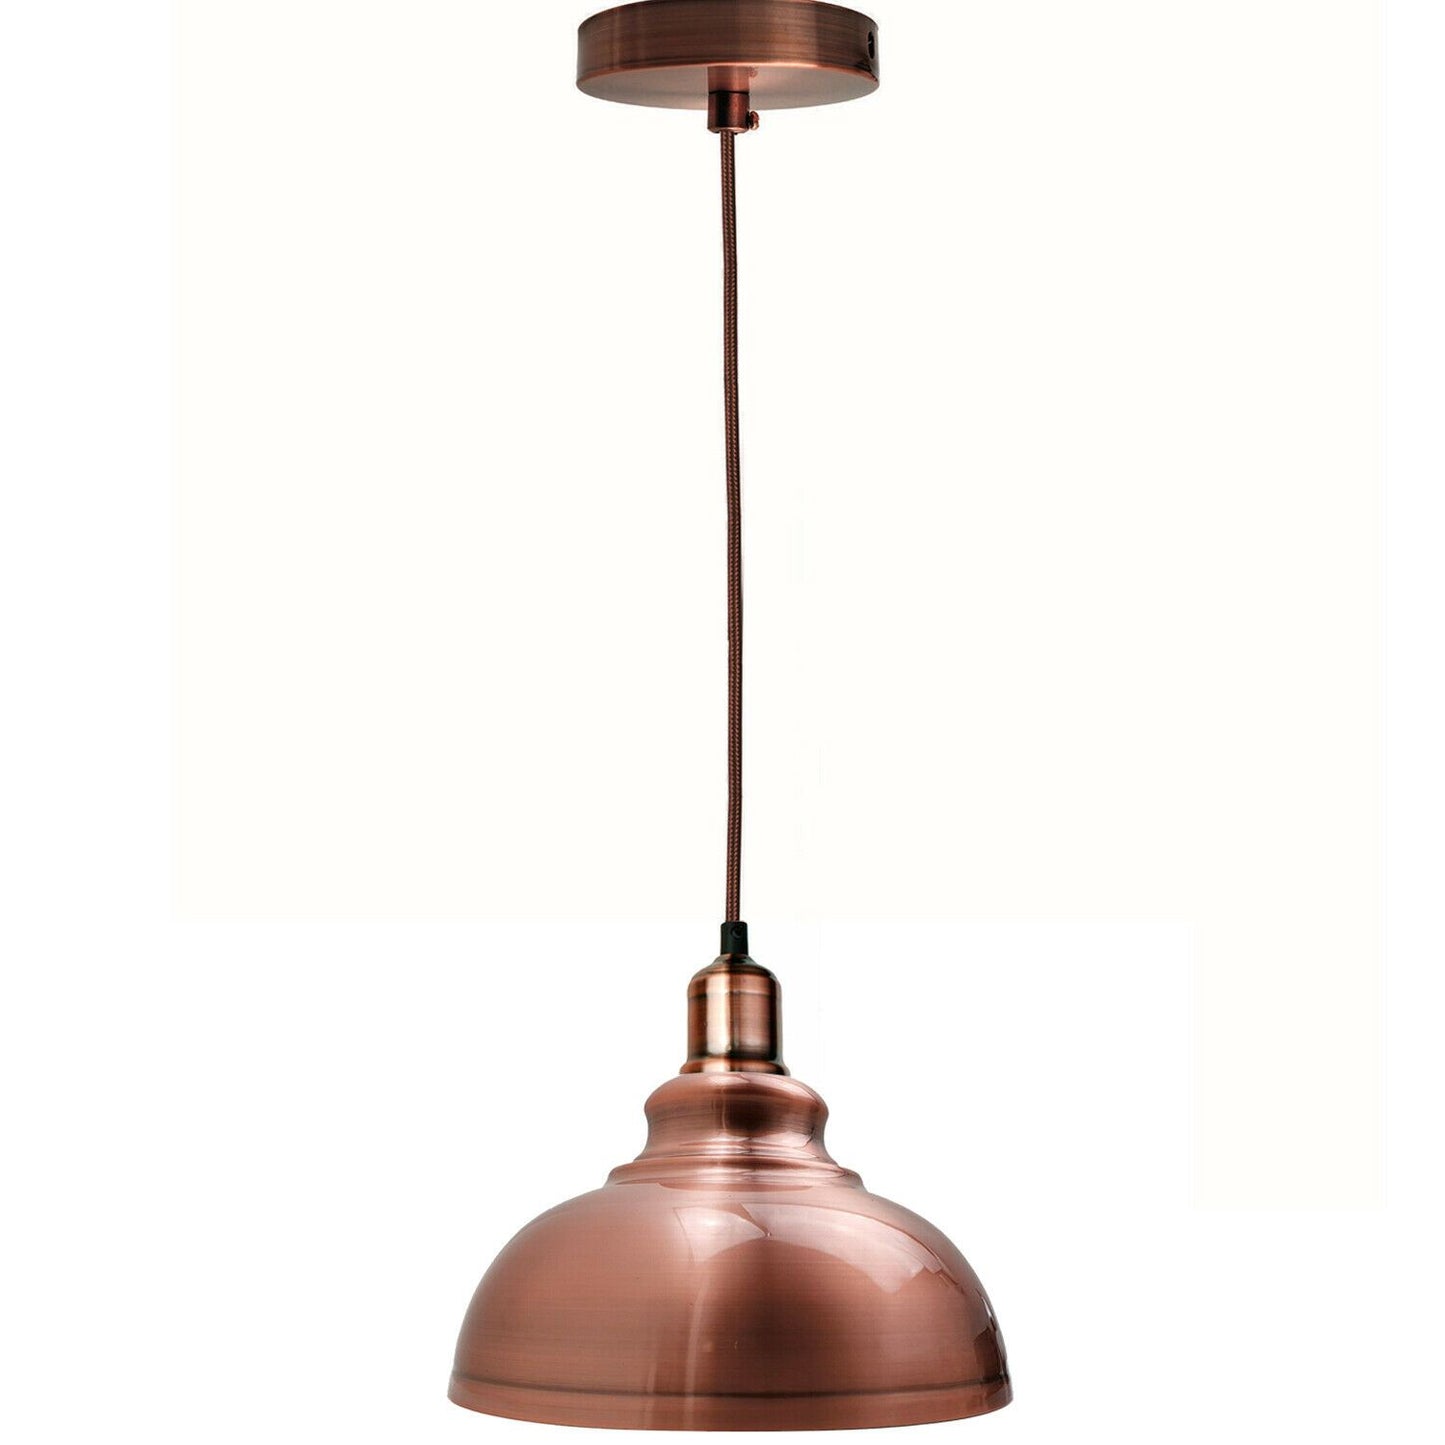 Vintage Industrial Modern Ceiling Pendant Light Loft Ceiling Lampshade UK NEW Style~1684